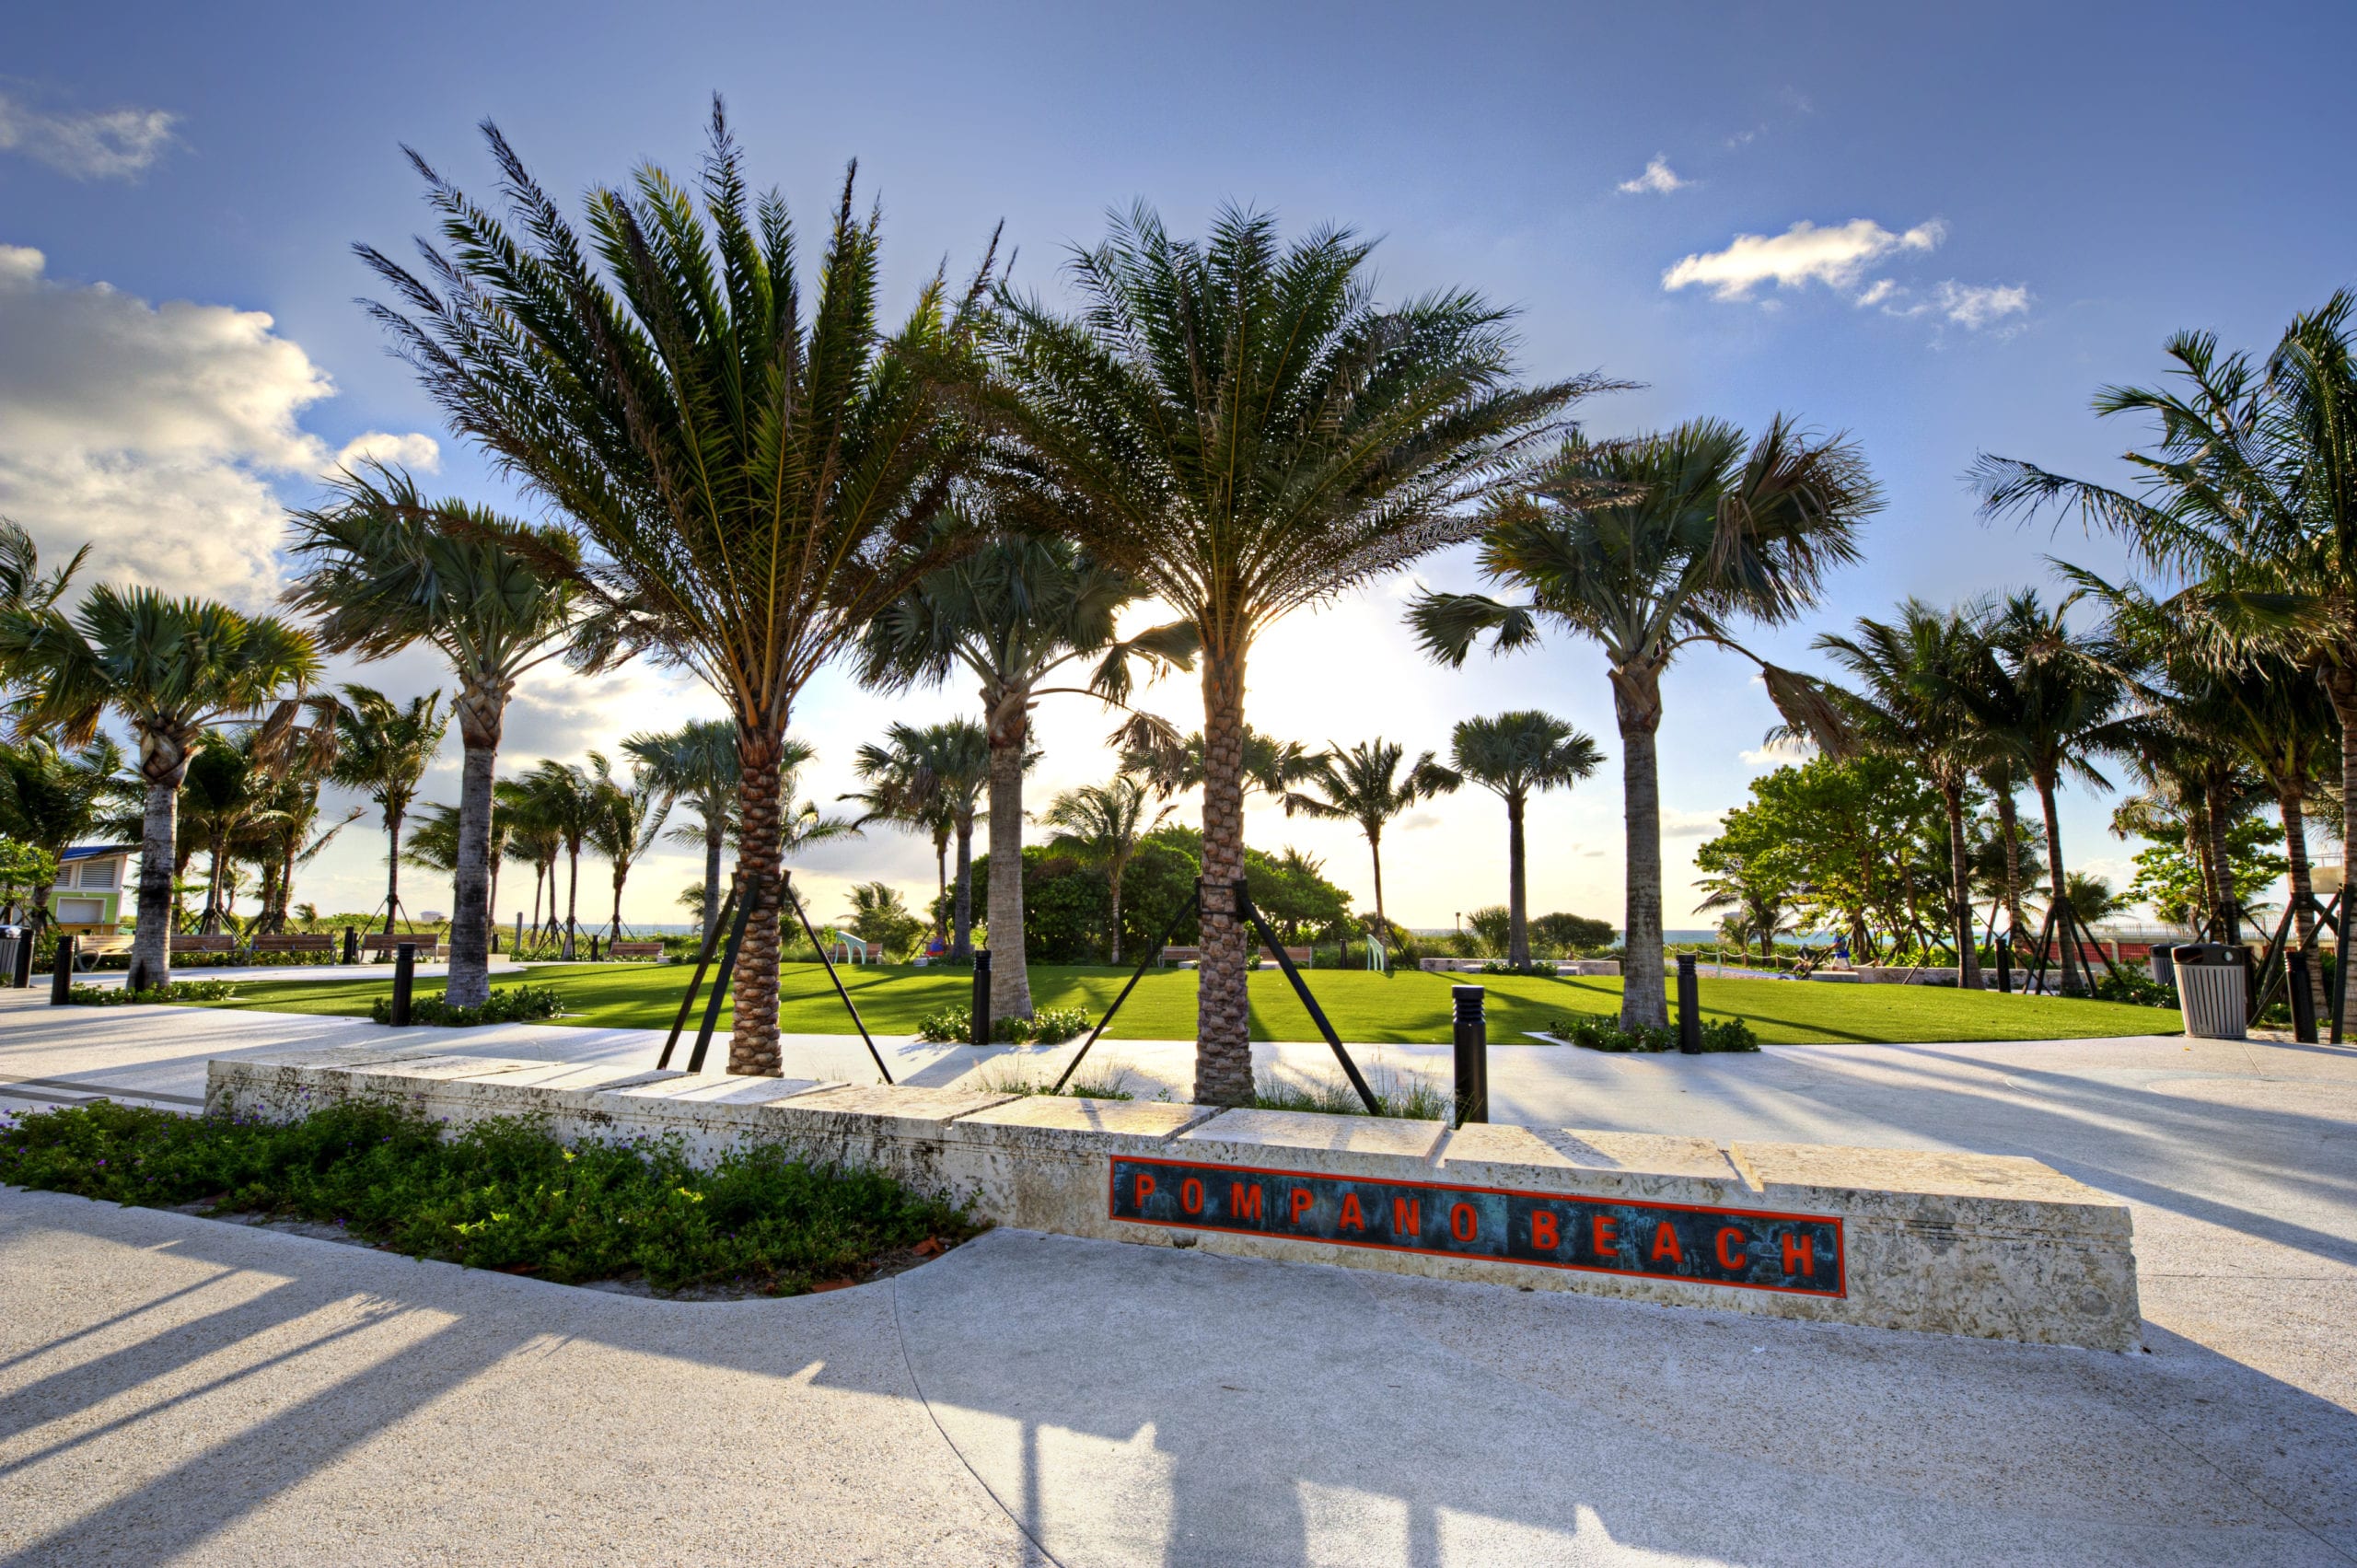 EDSA Pompano Beach Boulevard grounds with palm trees